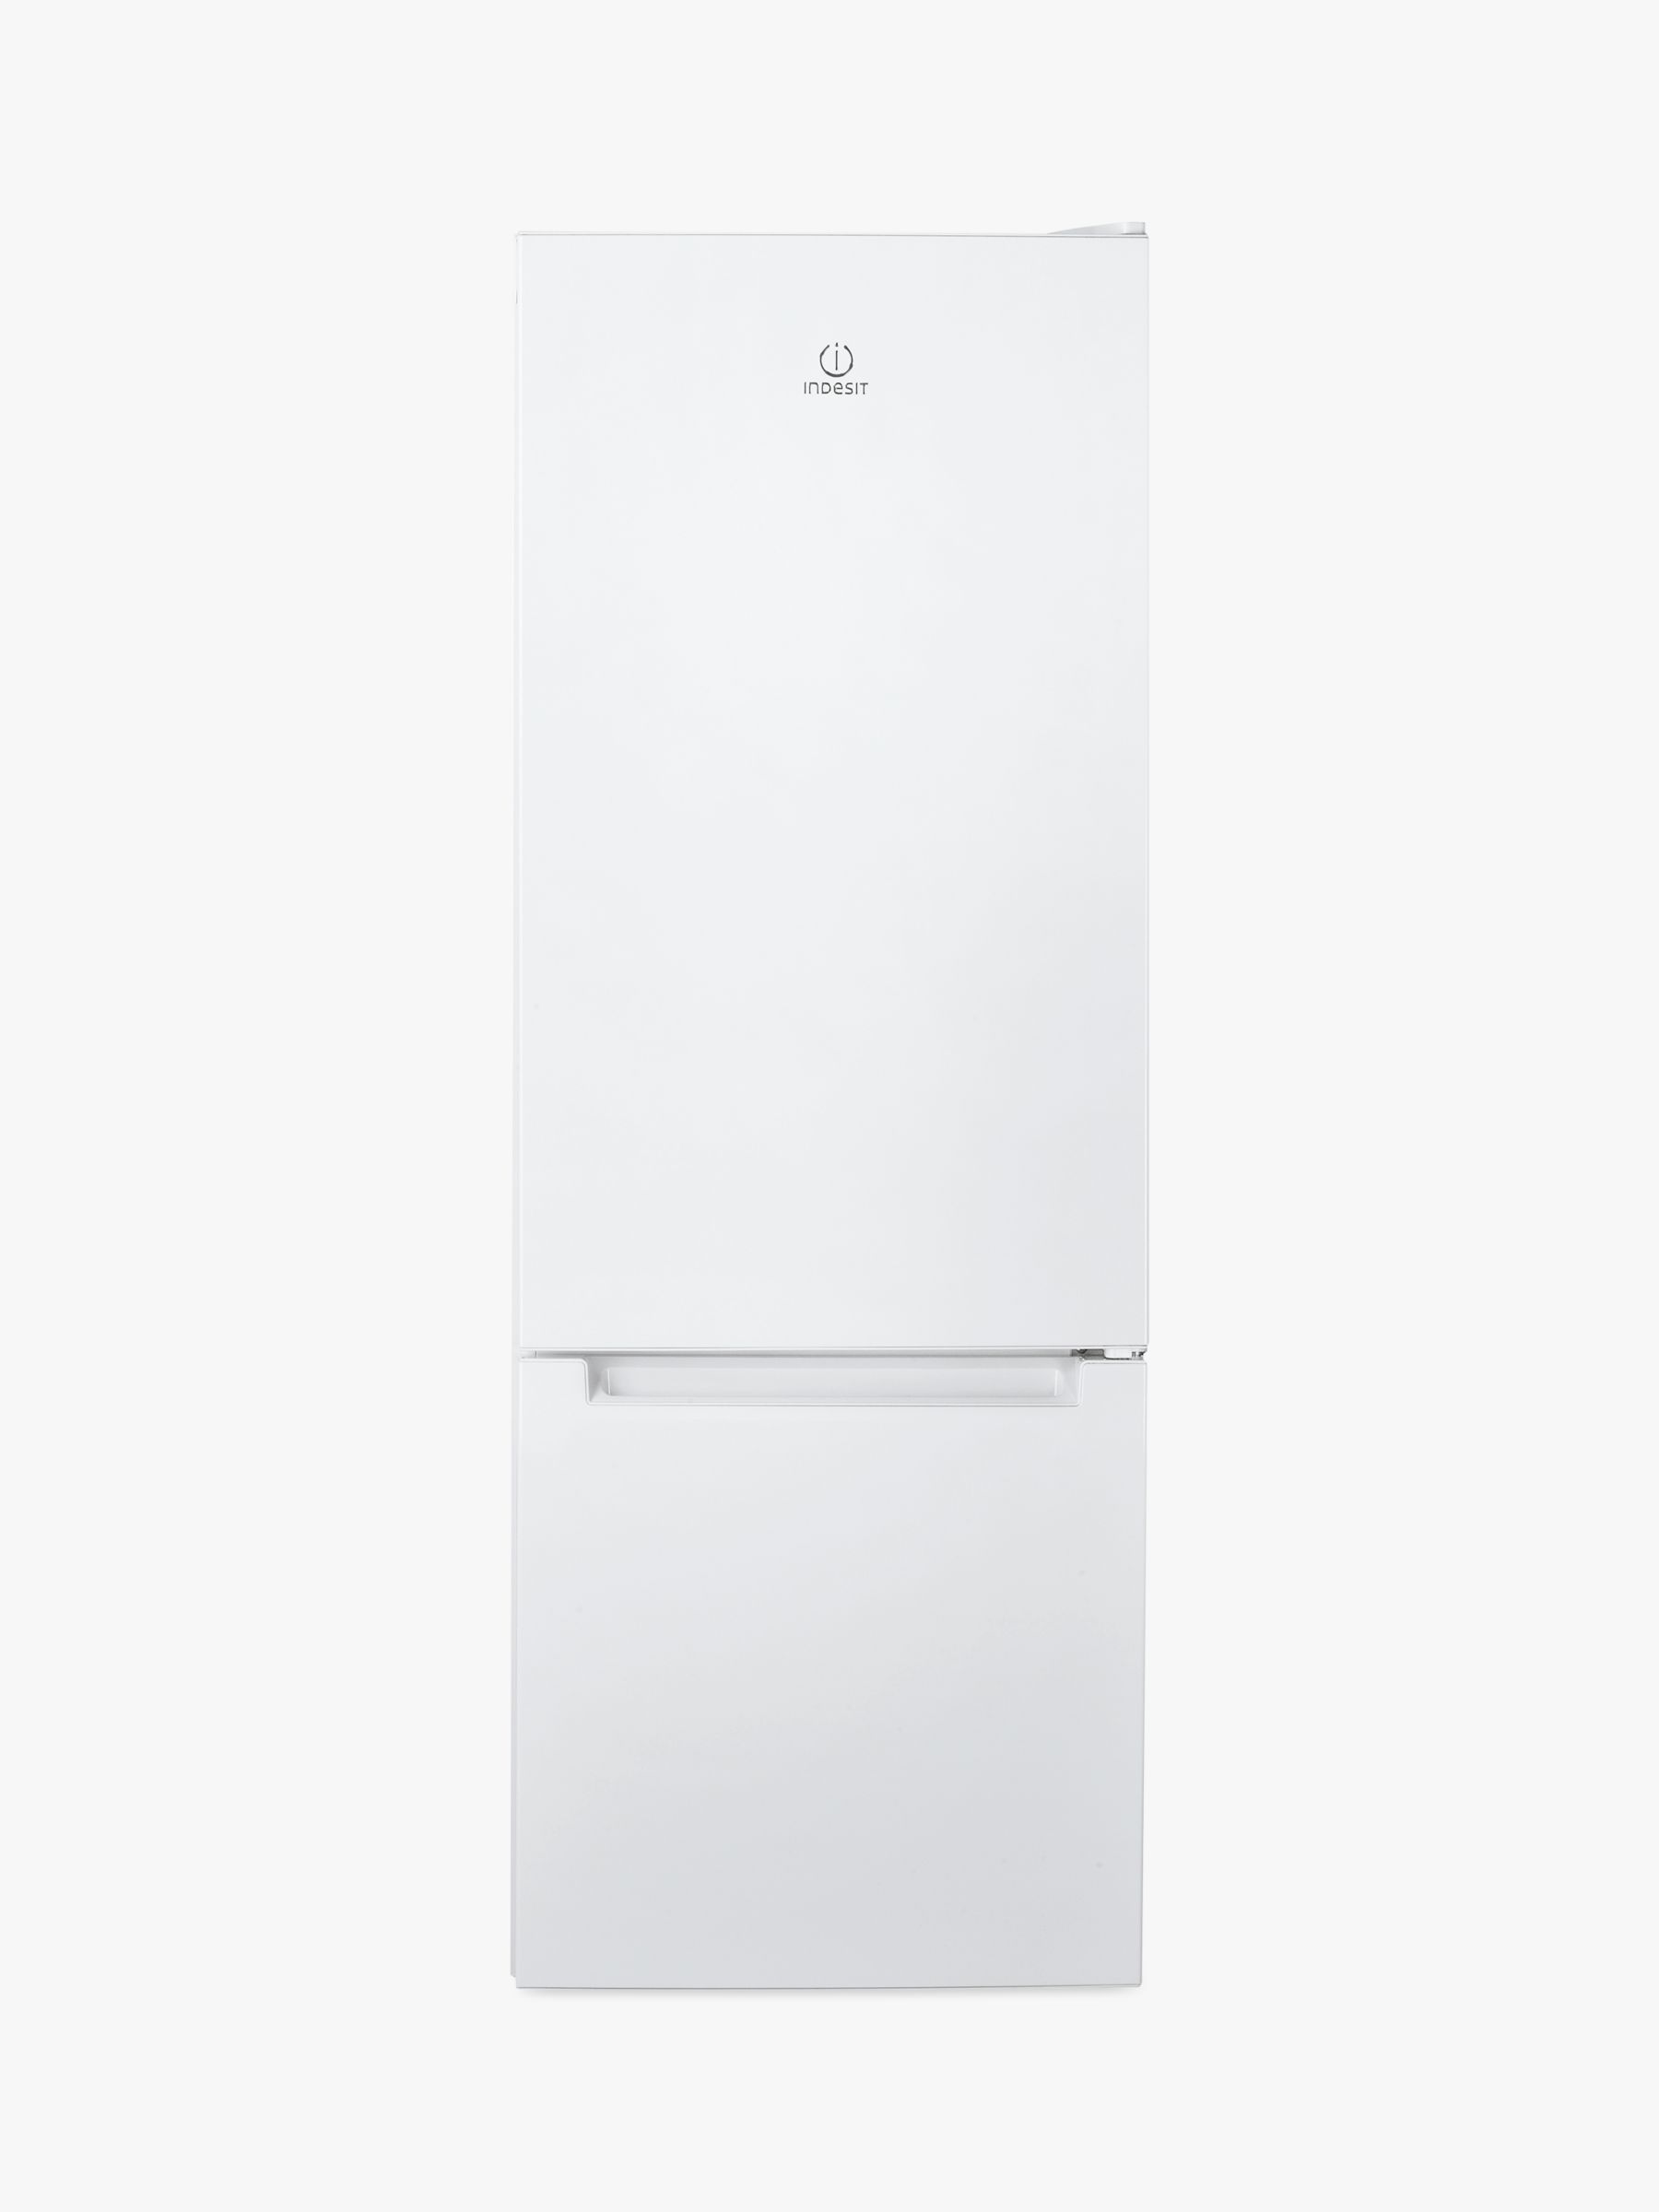 Indesit LR6S1WUK.1 Freestanding Fridge Freezer, A+ Energy Rating, White